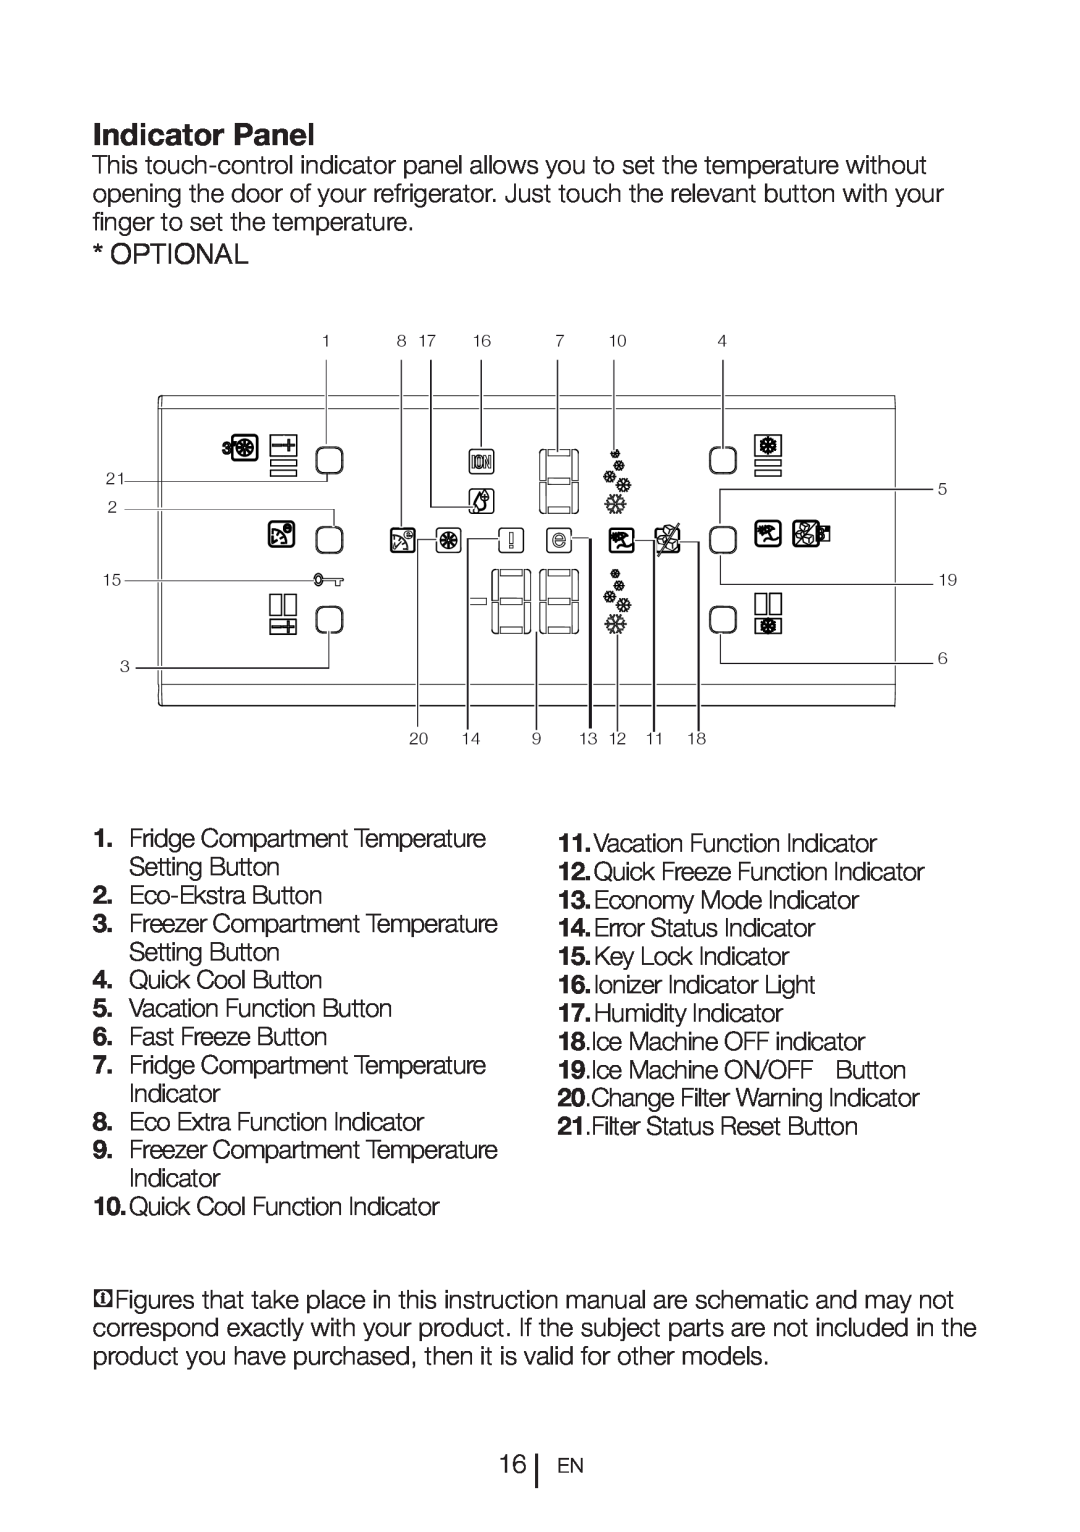 Blomberg KFD 9952 X manual Indicator Panel, Optional, Quick Freeze Function Indicator, Change Filter Warning Indicator 